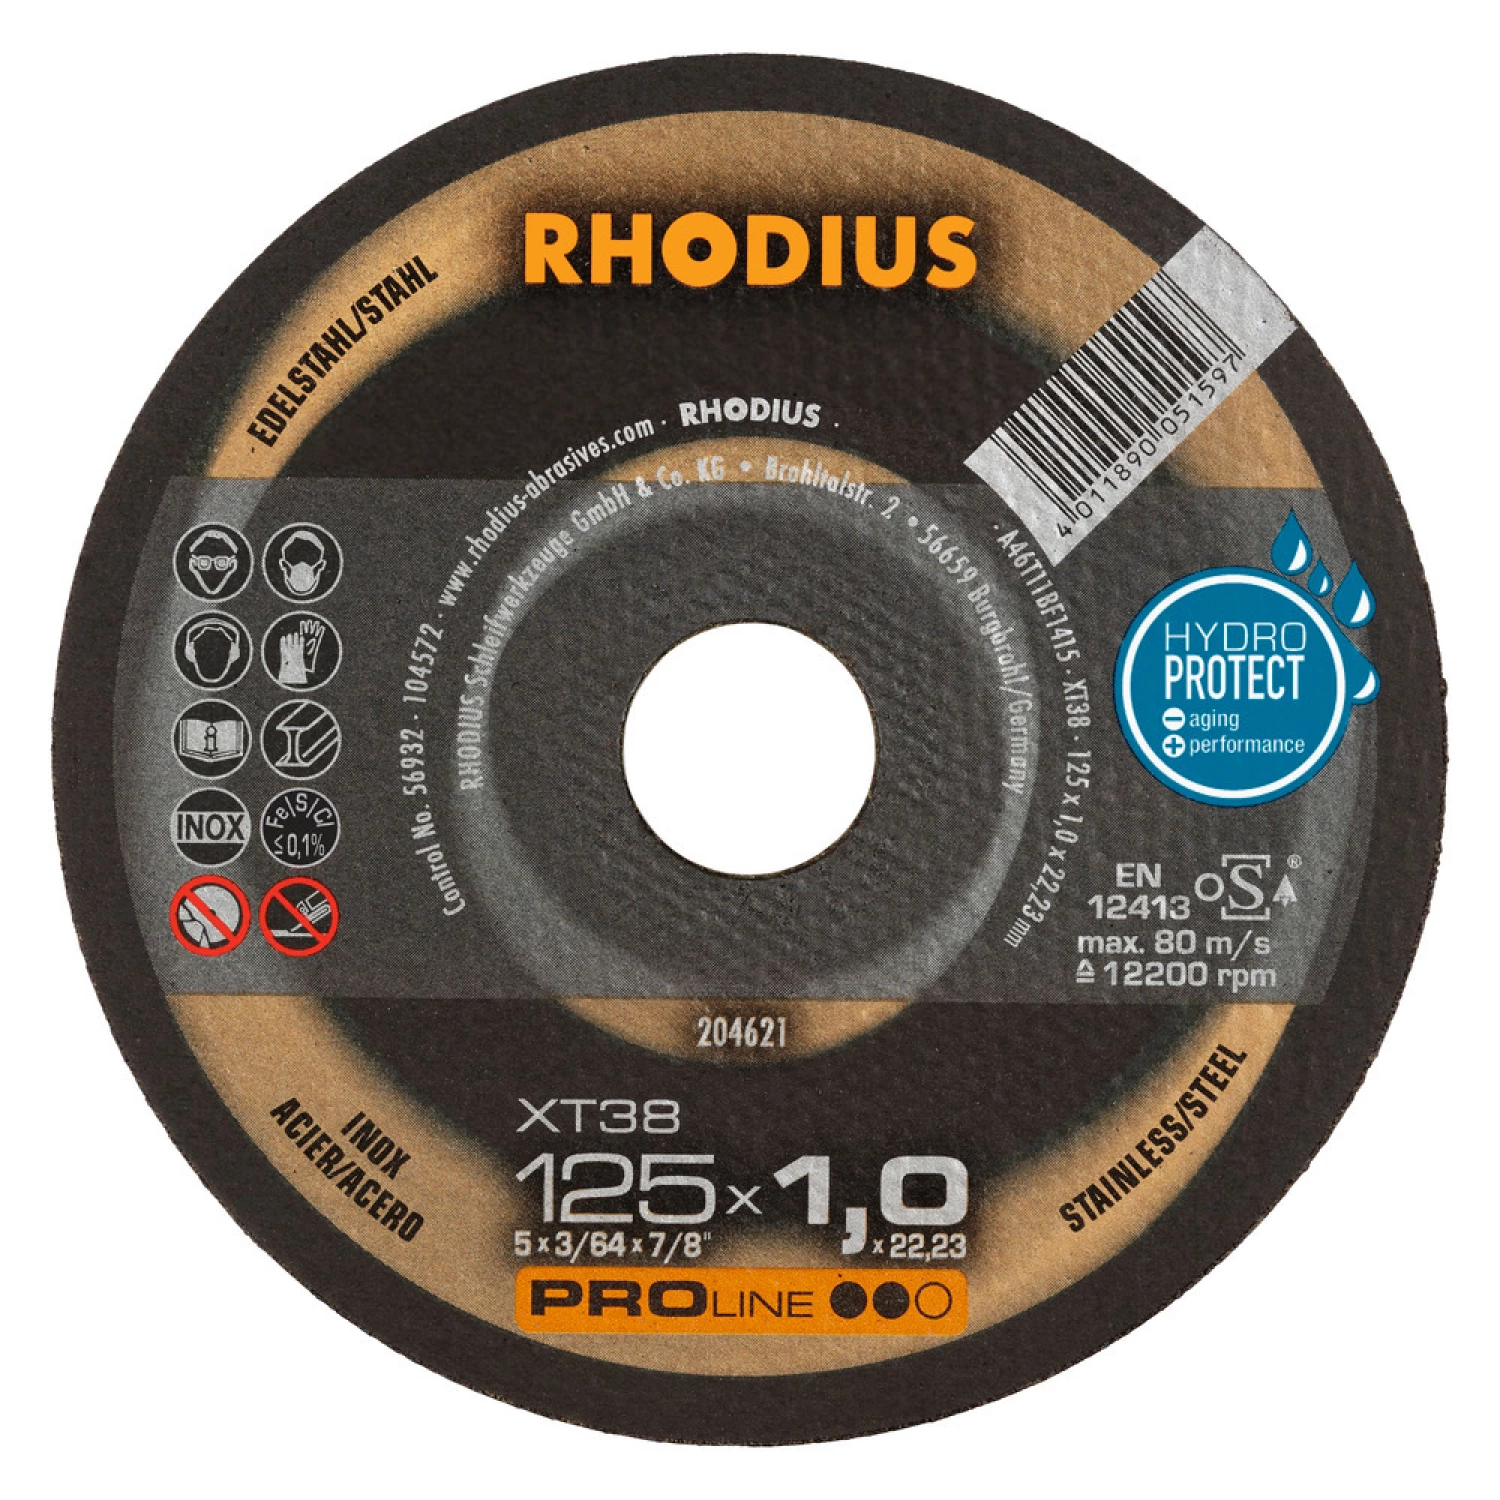 Rhodius 204621 XT38 PROline lll Disque à tronçonner extra fin 125 x 22,23 x 1,0mm (50 pcs)-image